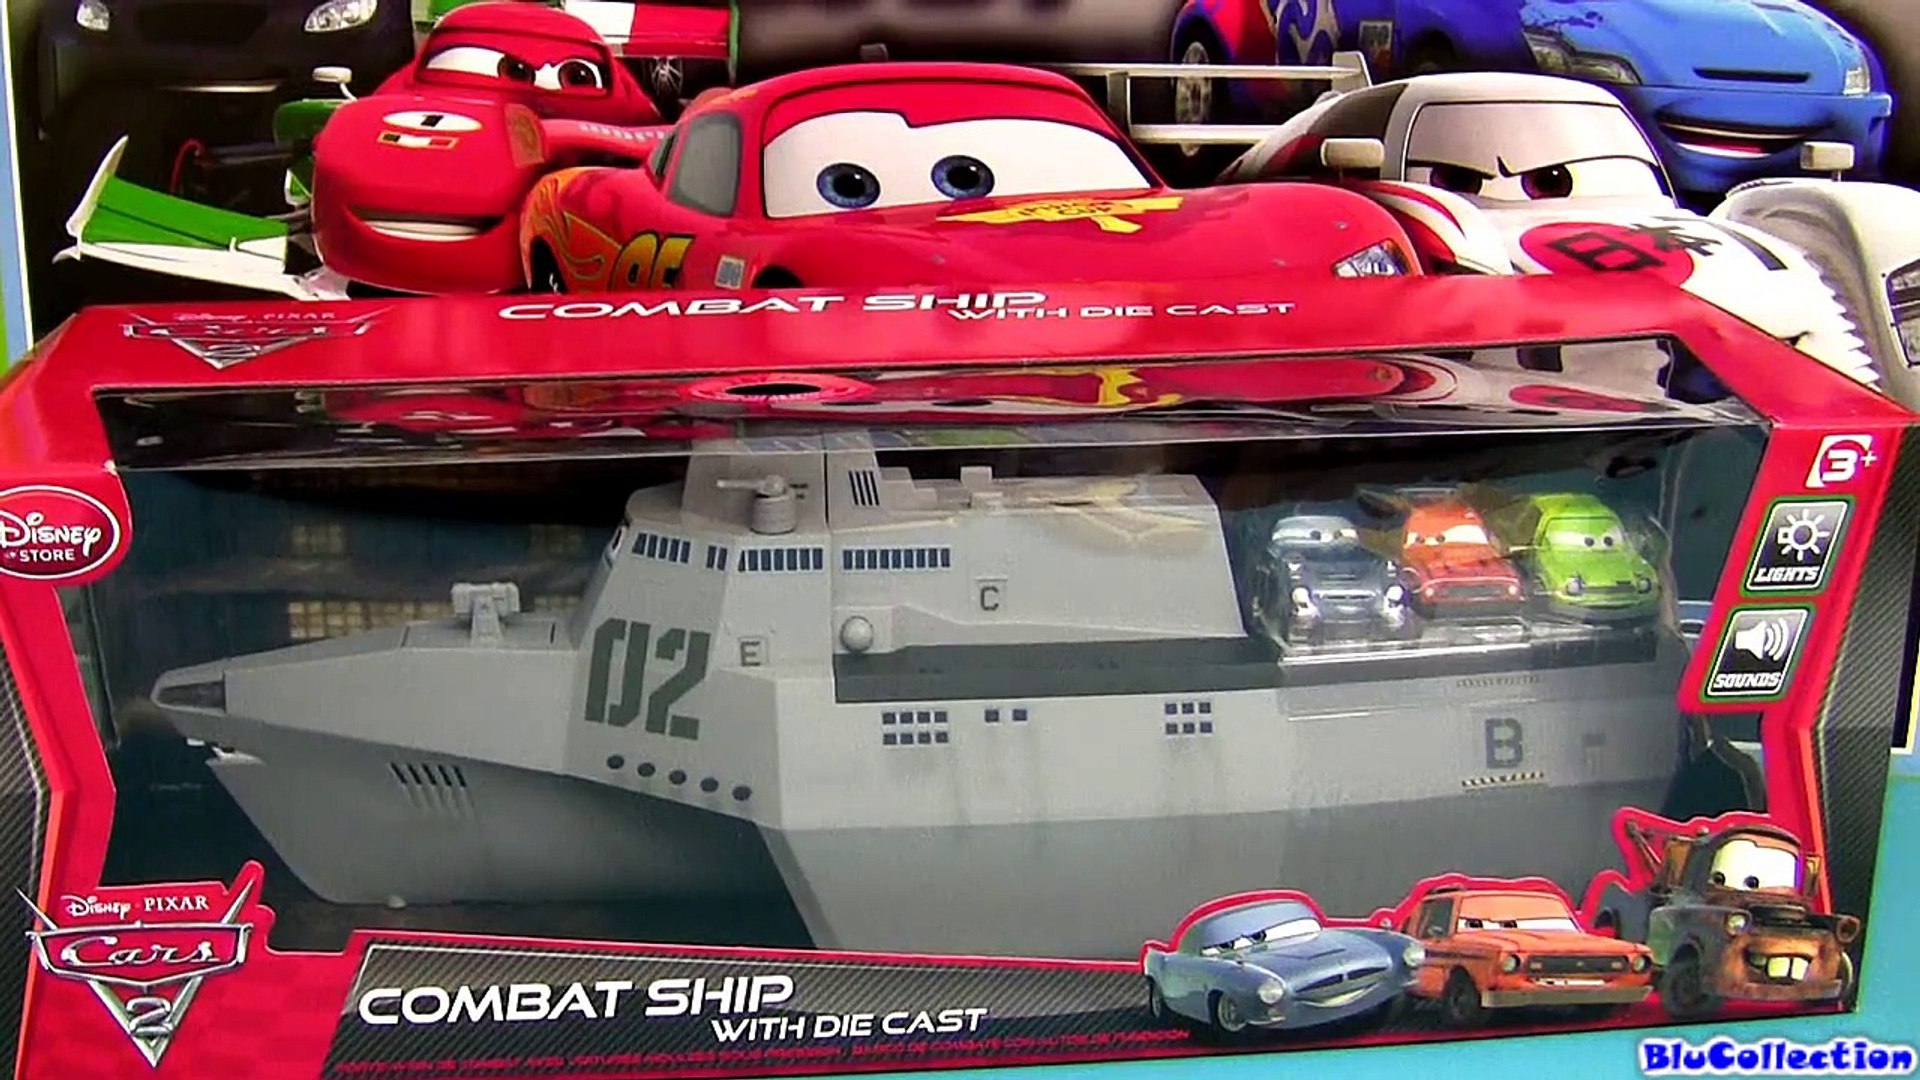 Тачки ведра. Тачки 2 игрушки Эйсер. Disney Pixar cars 2 Toys. Тони Трихалл Тачки 2.